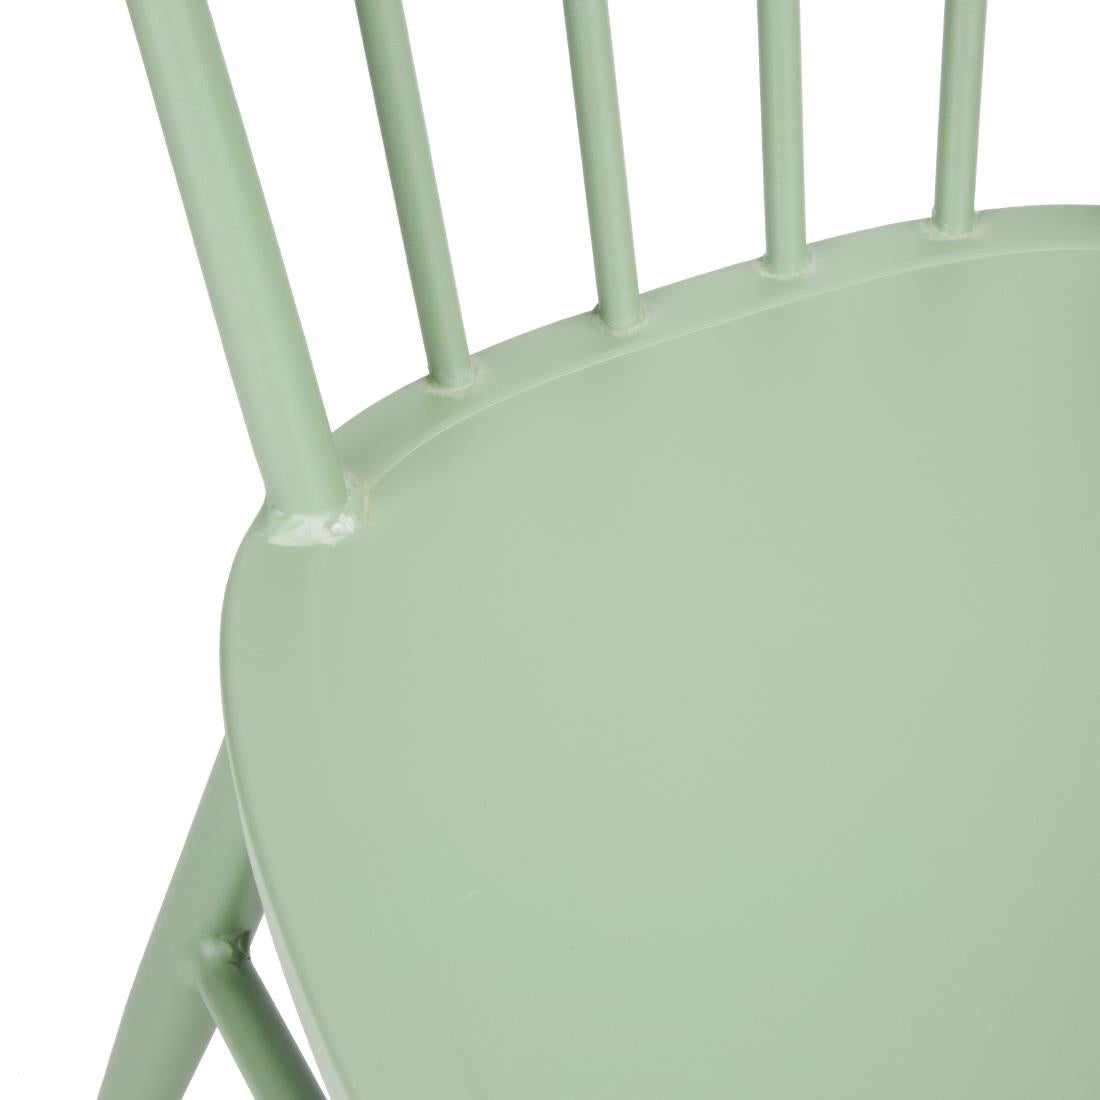 DX687 Bolero Windsor Aluminium Green Chairs (Pack of 4)